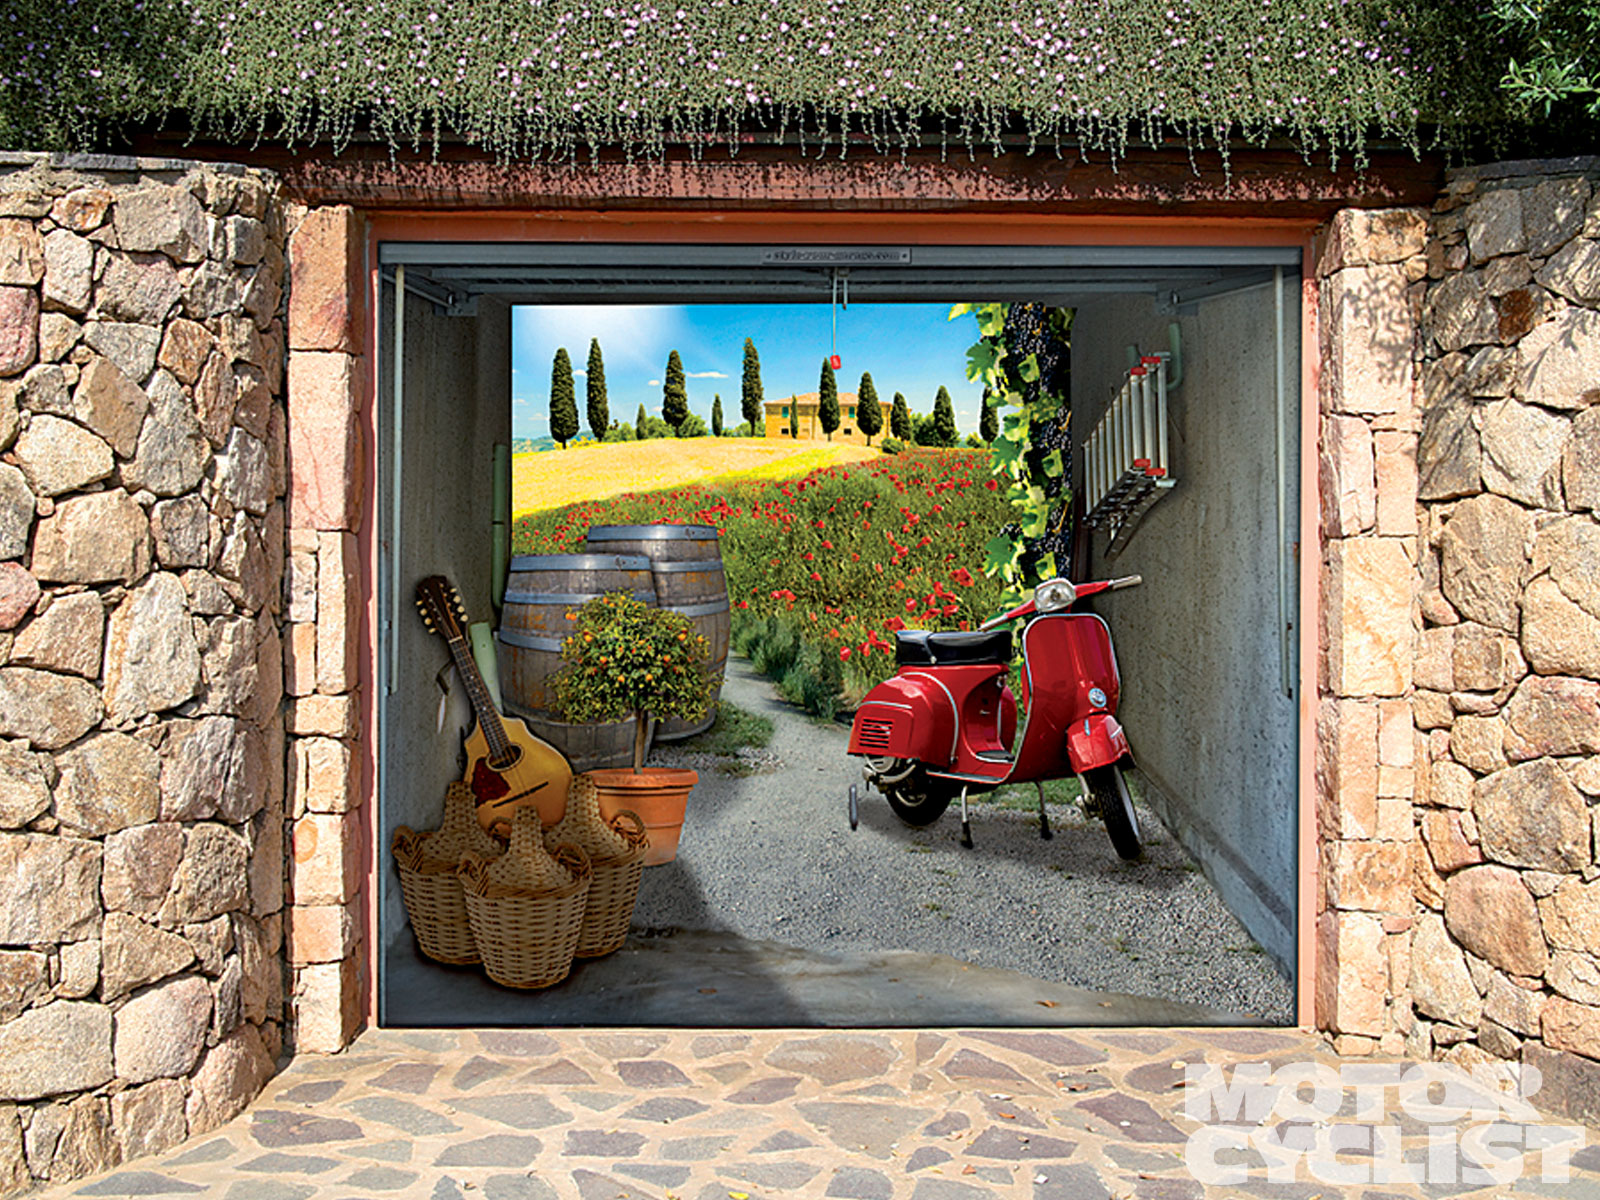 3d Look Door Stylish 3D Look Of Garage Door Decals With Stone Cladding Covering The Wall Displaying Garden And Red Scooter Decoration Creative Garage Door Covers And Decals To Style Your Artistic Garage Door